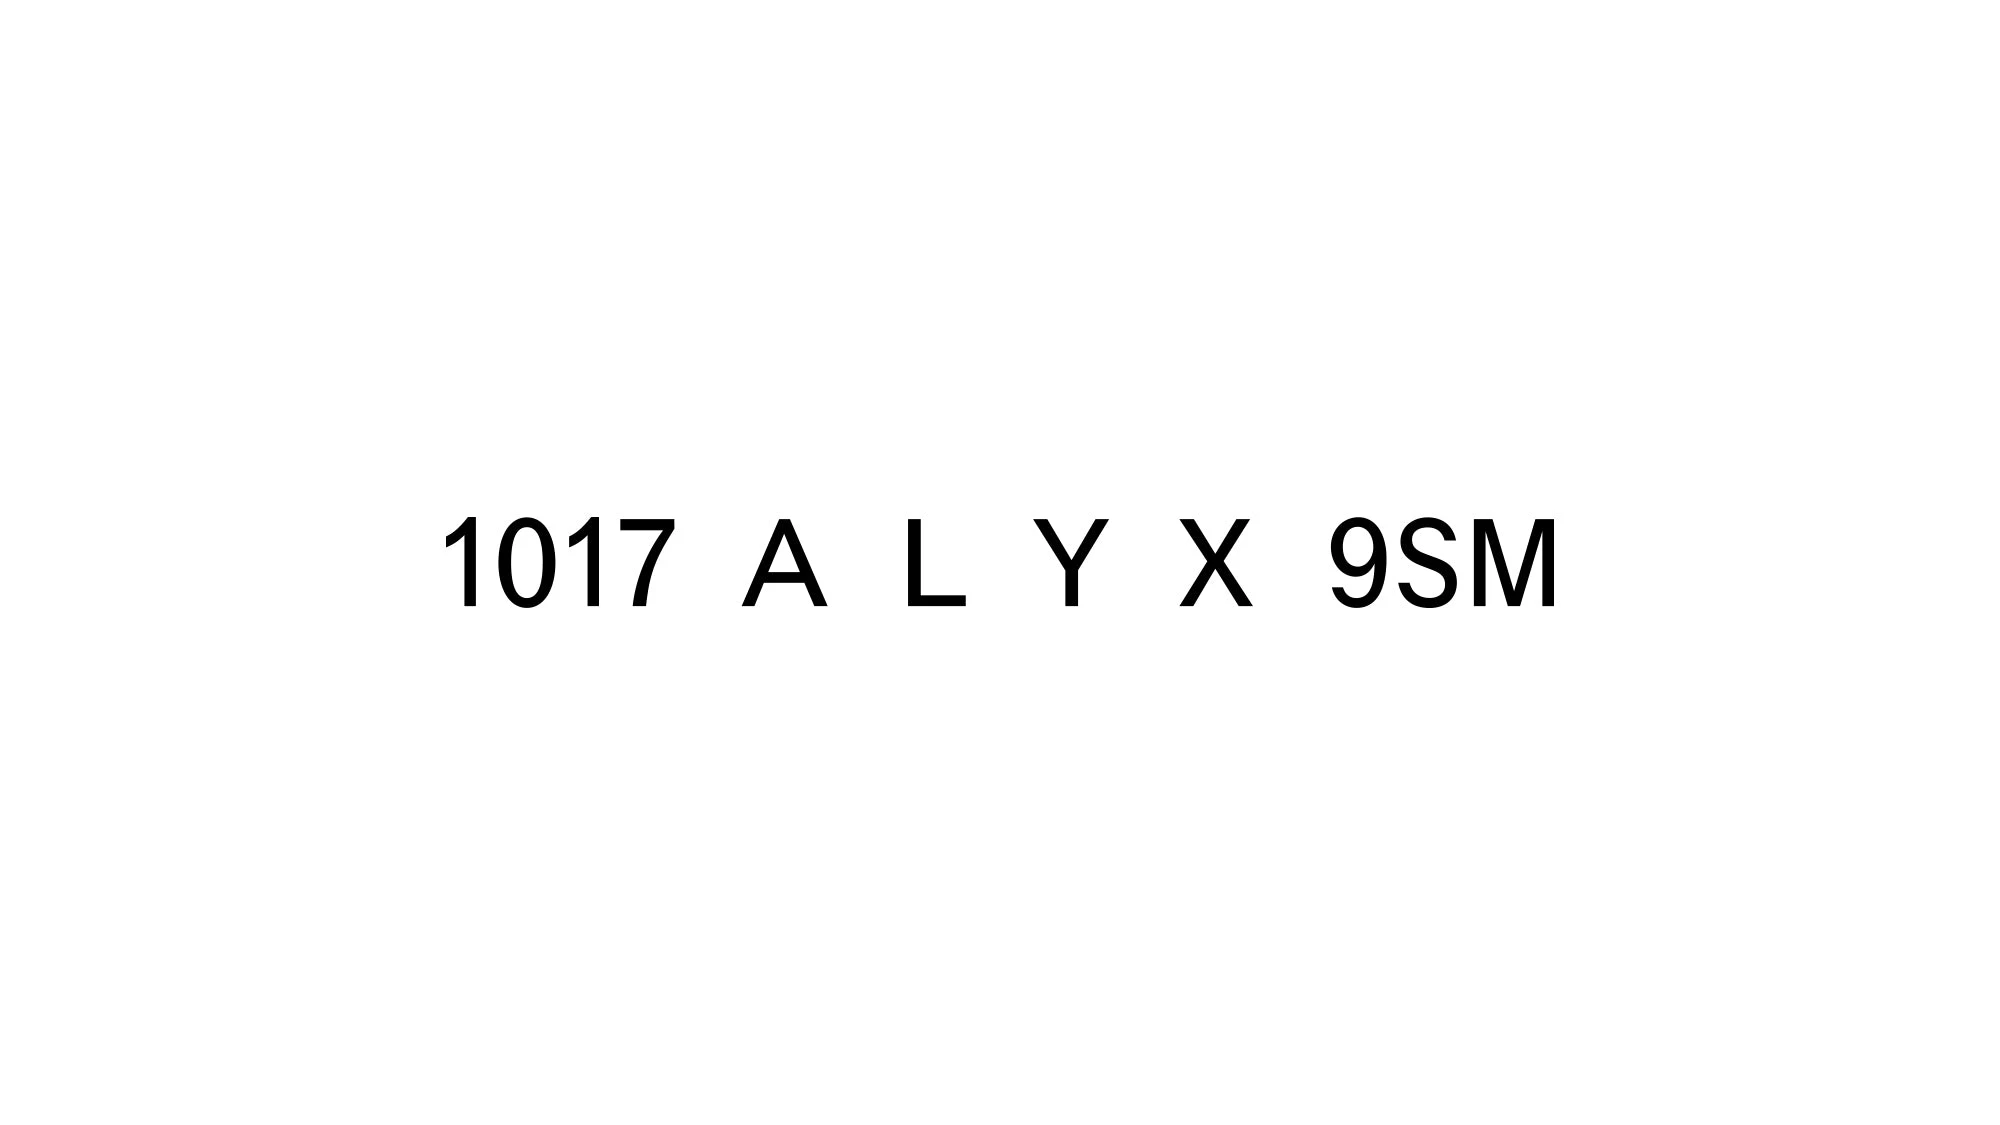  Codice Sconto 1017 ALYX 9SM